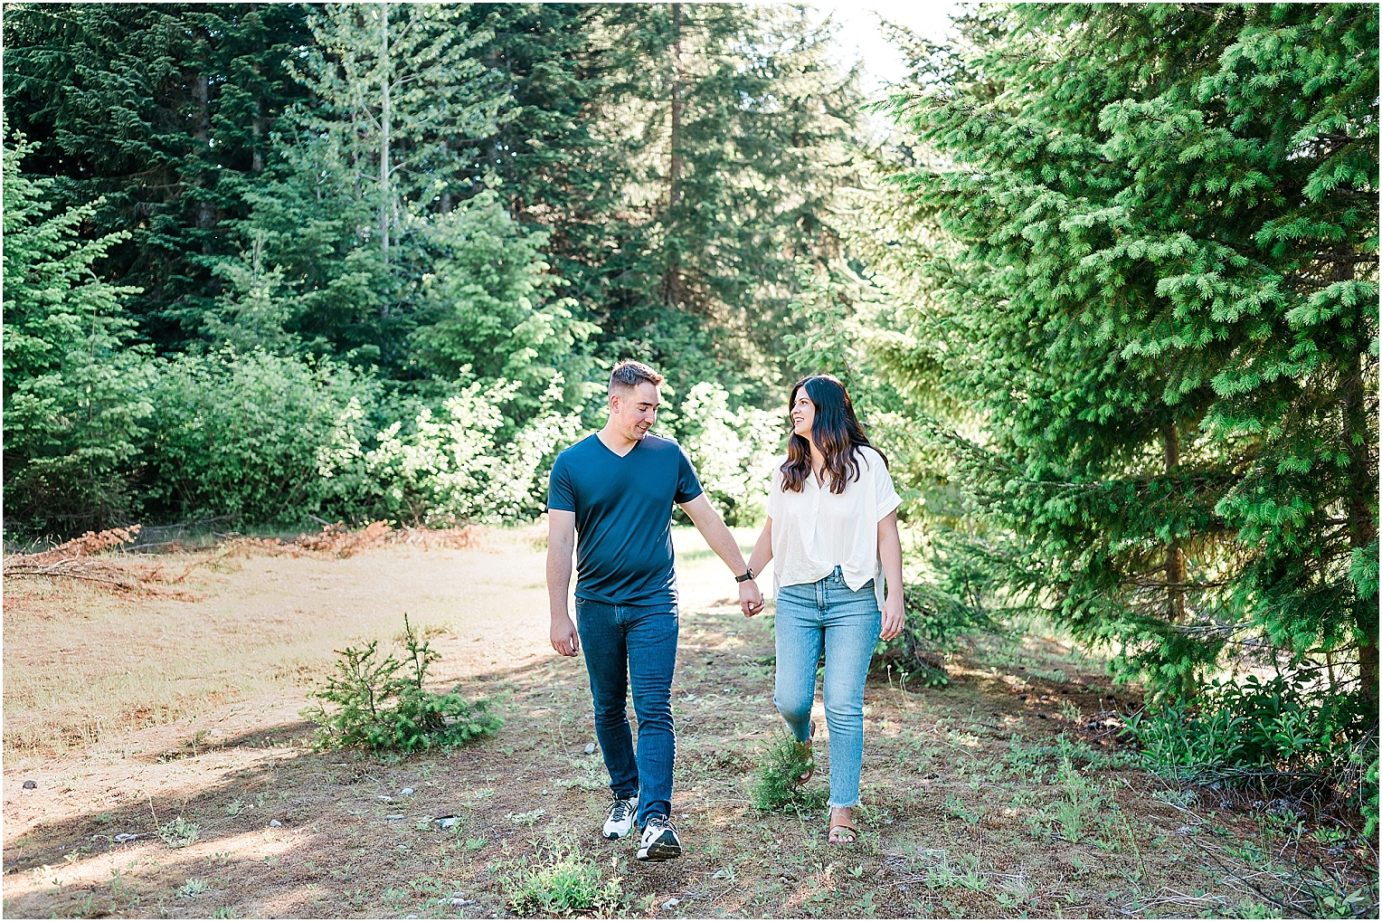 Gold Creek Pond engagement session Jon and Kristen couple walking along trail